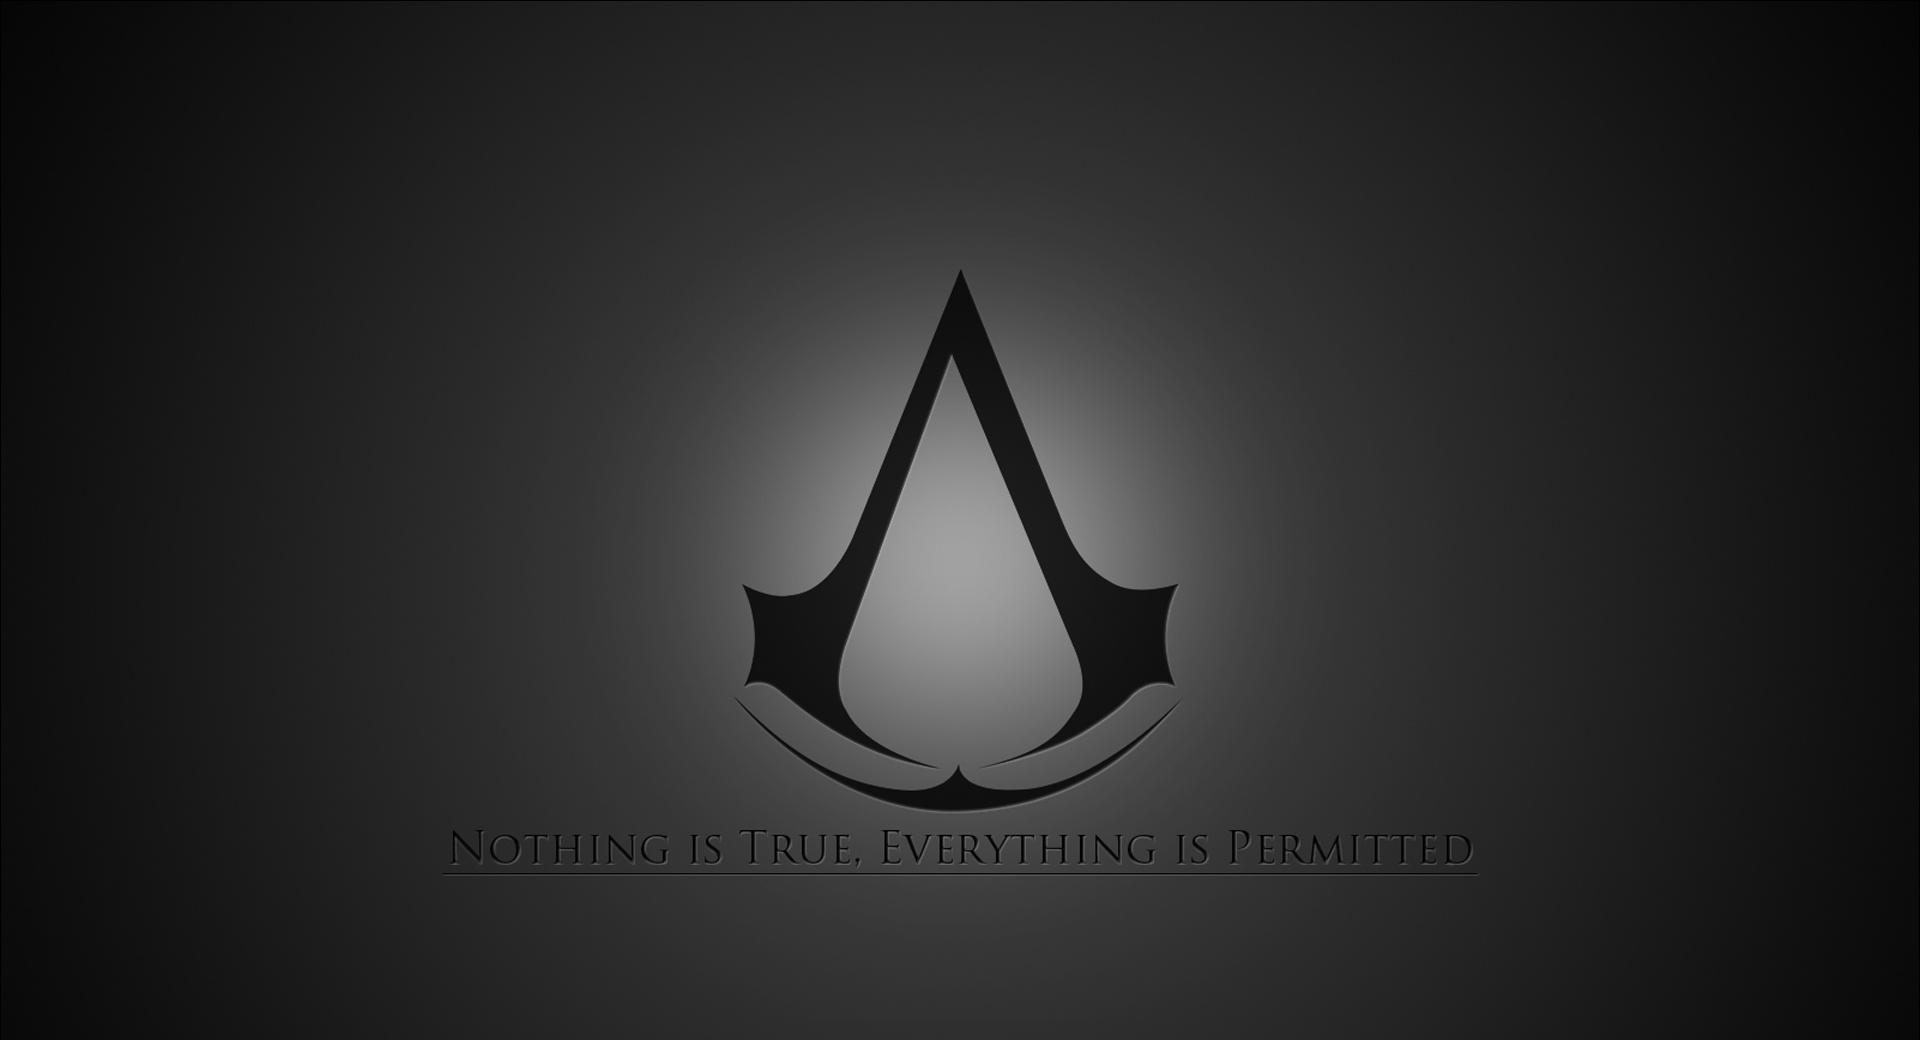 Assassins Creed Wisdom at 1024 x 1024 iPad size wallpapers HD quality